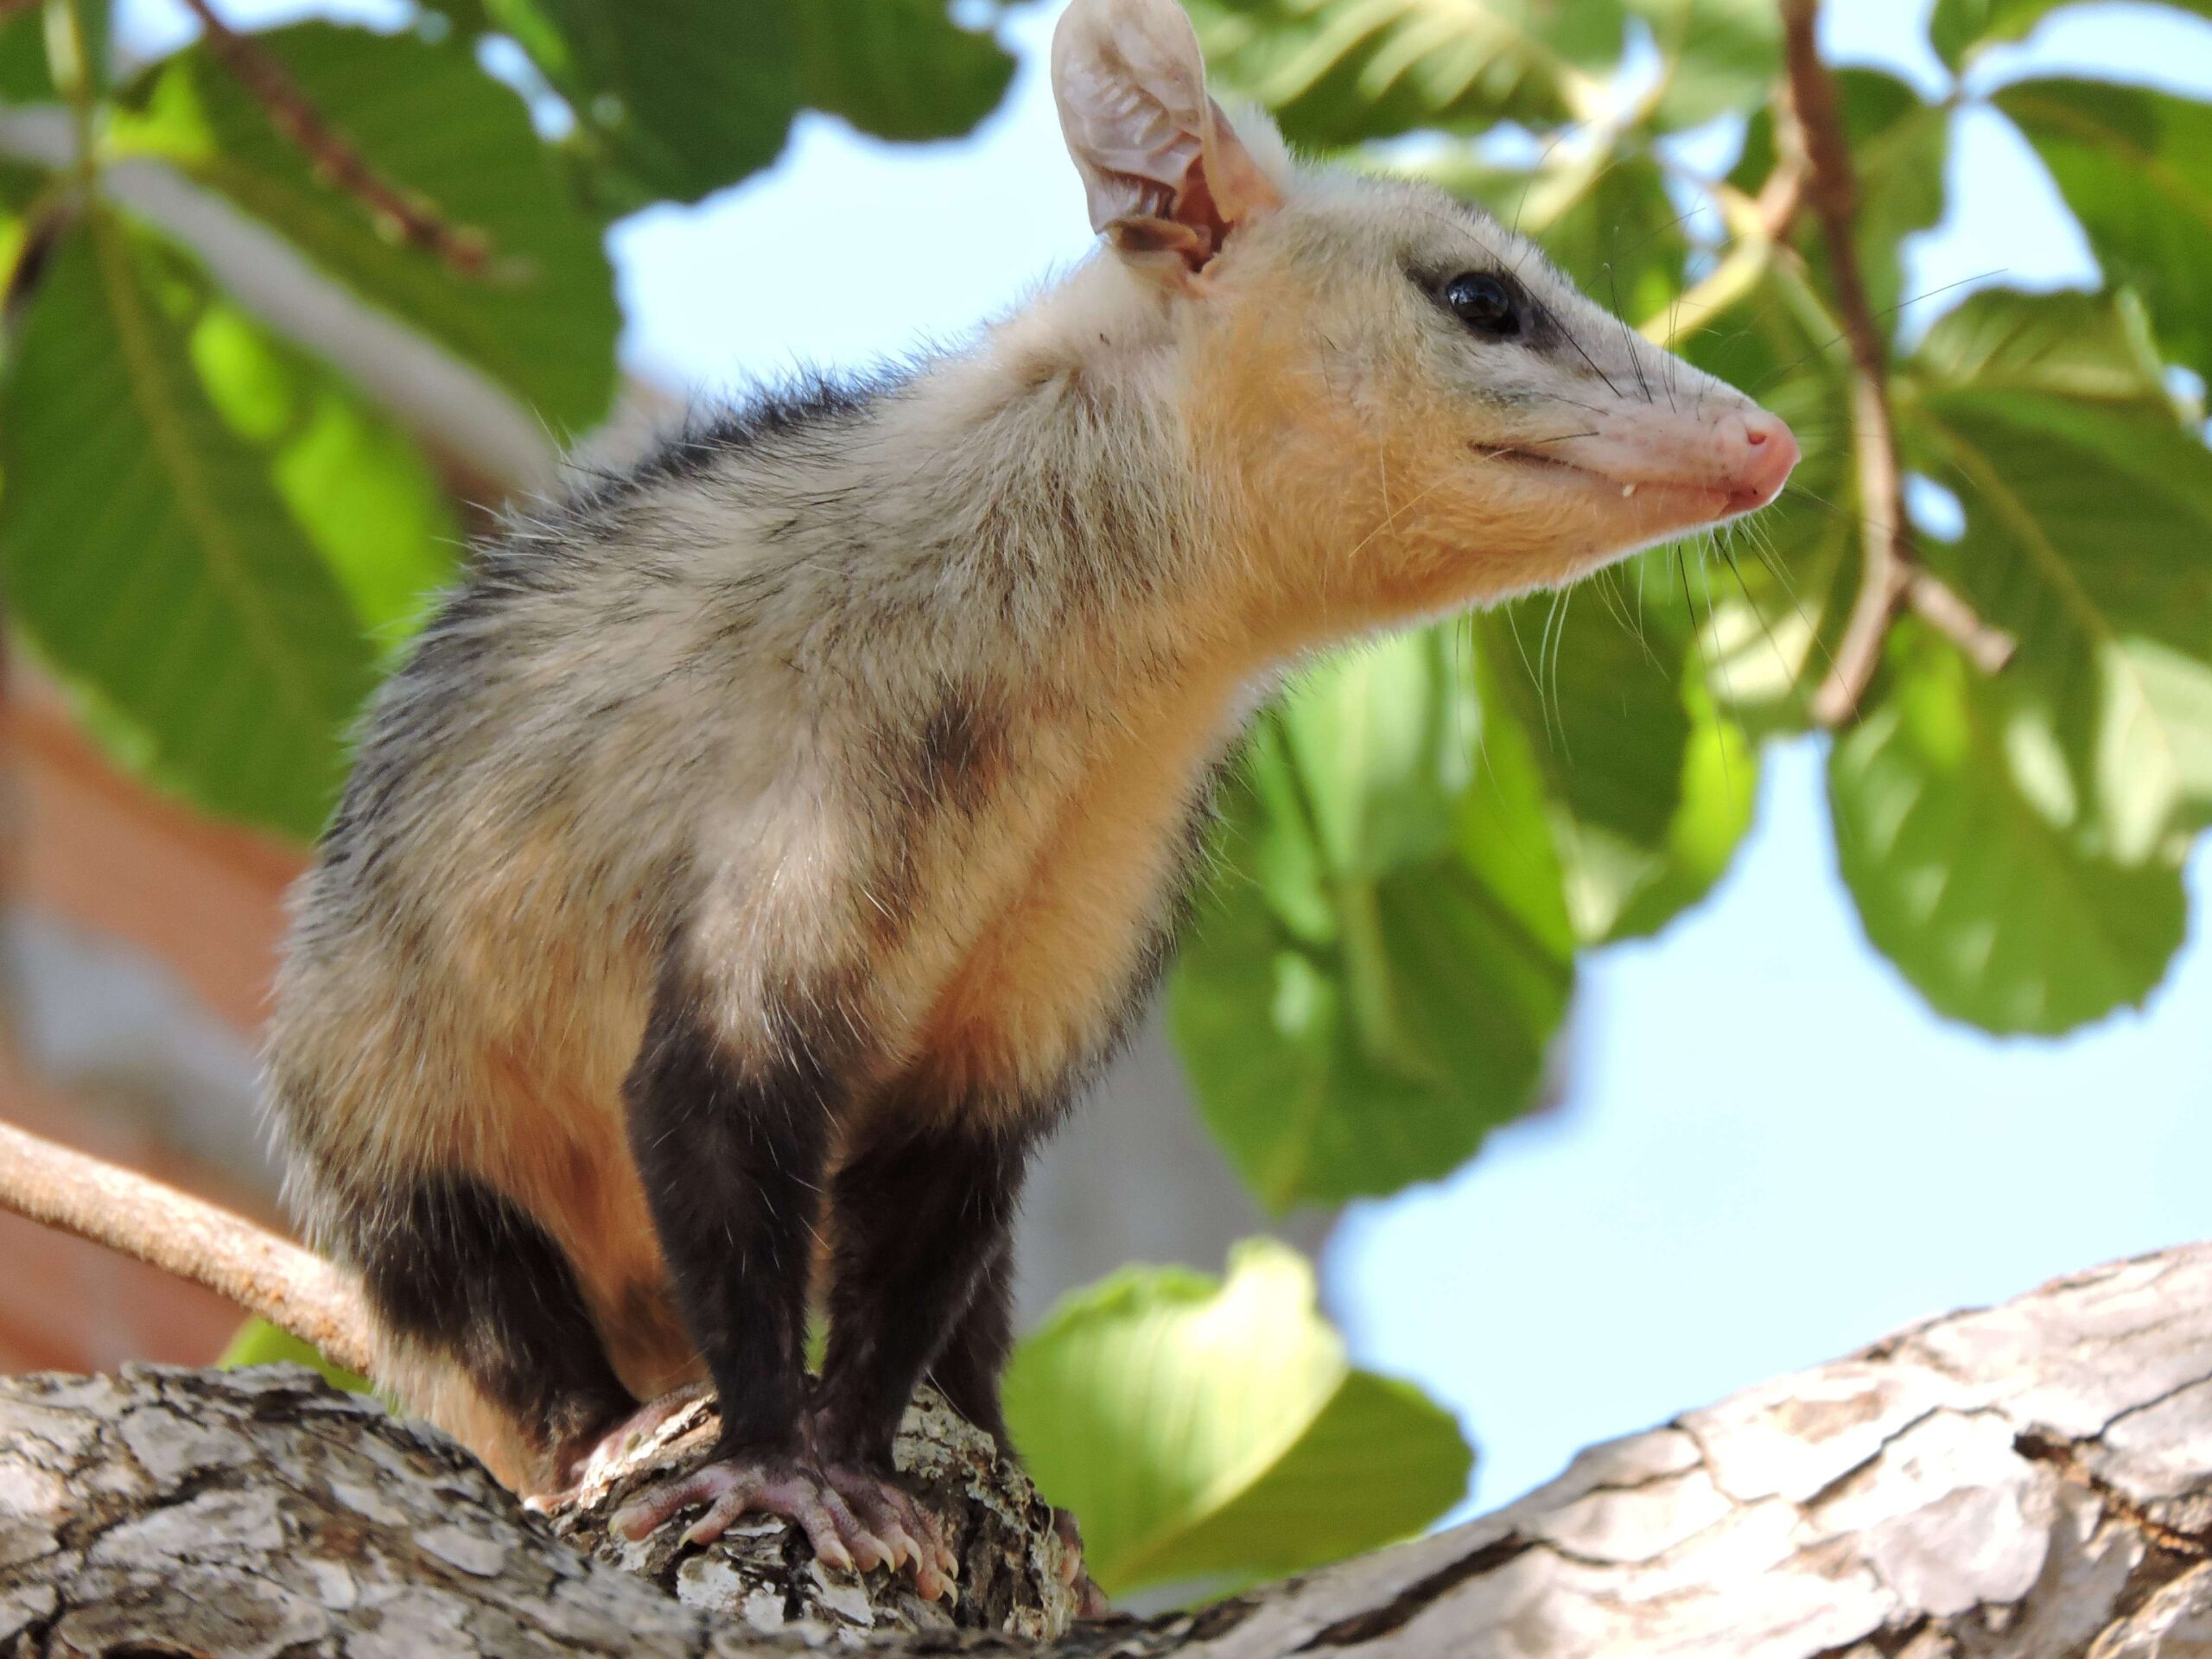 Opossum Removal NJ | Humane Wildlife Opossum Removal New Jersey - +1-877-468-5748